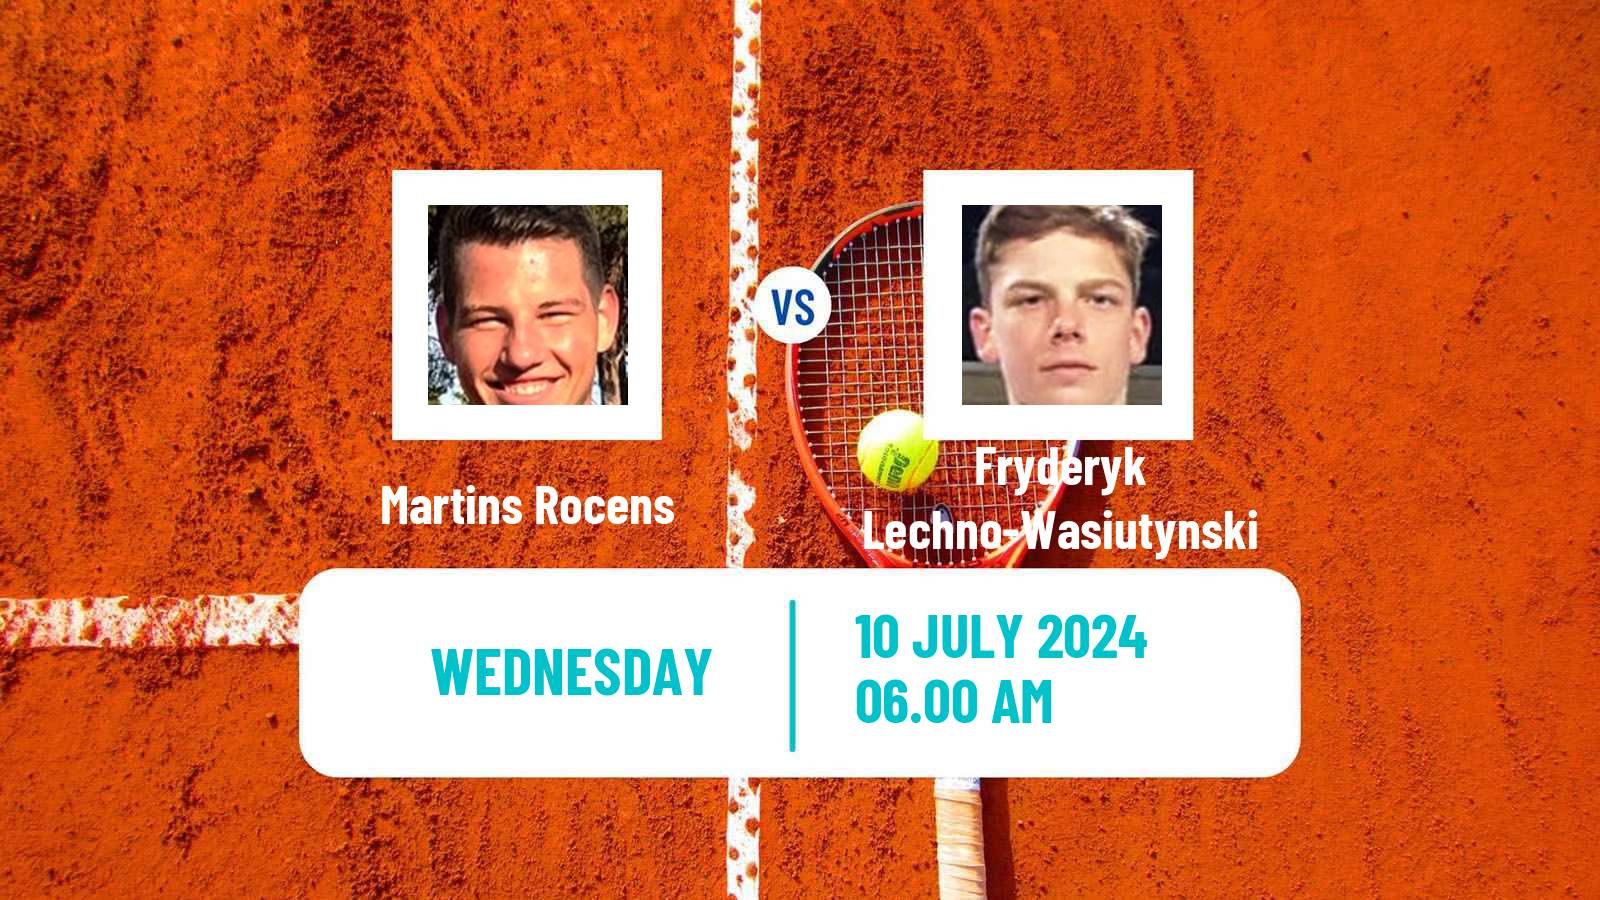 Tennis ITF M15 Lodz Men Martins Rocens - Fryderyk Lechno-Wasiutynski